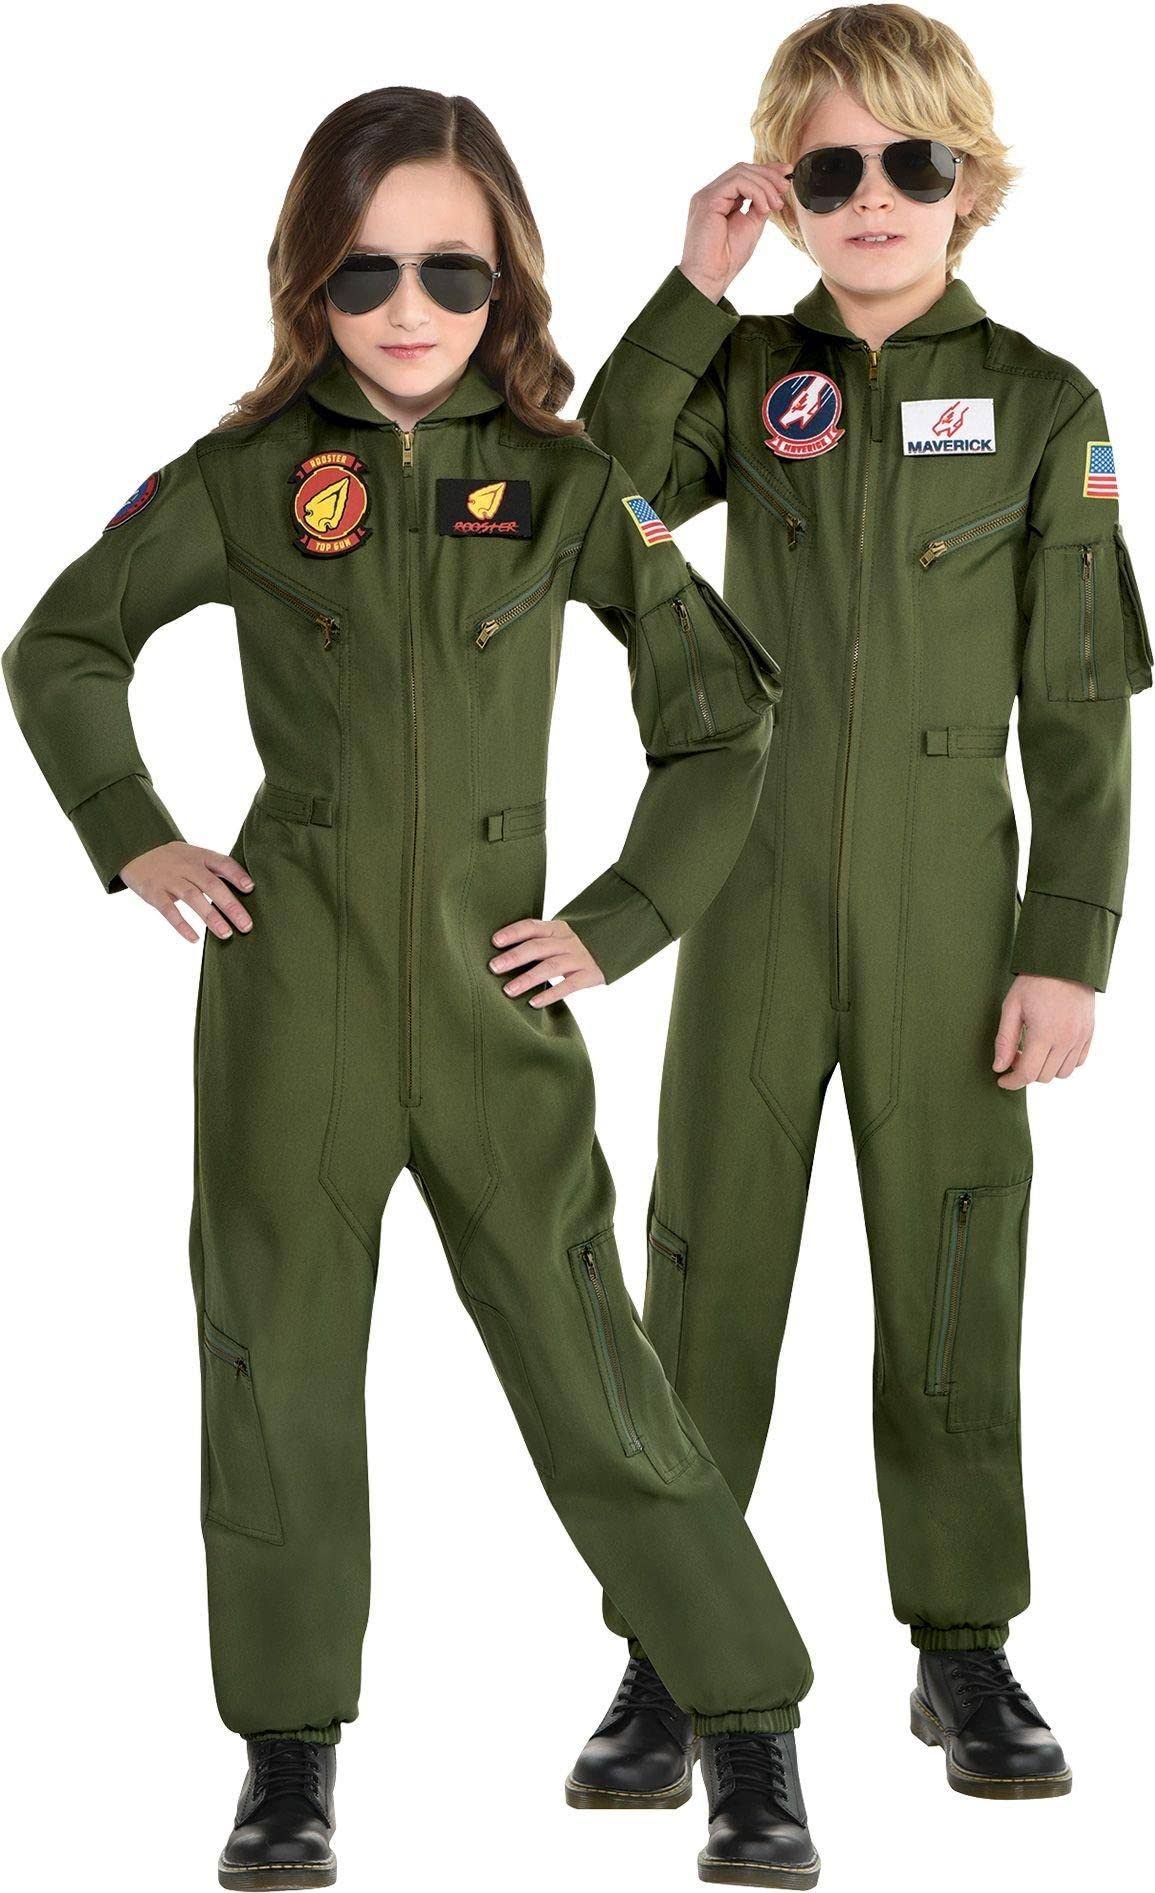 Amscan Top Gun: Maverick Flight Suit Costume Adult Mens - Green, Standard